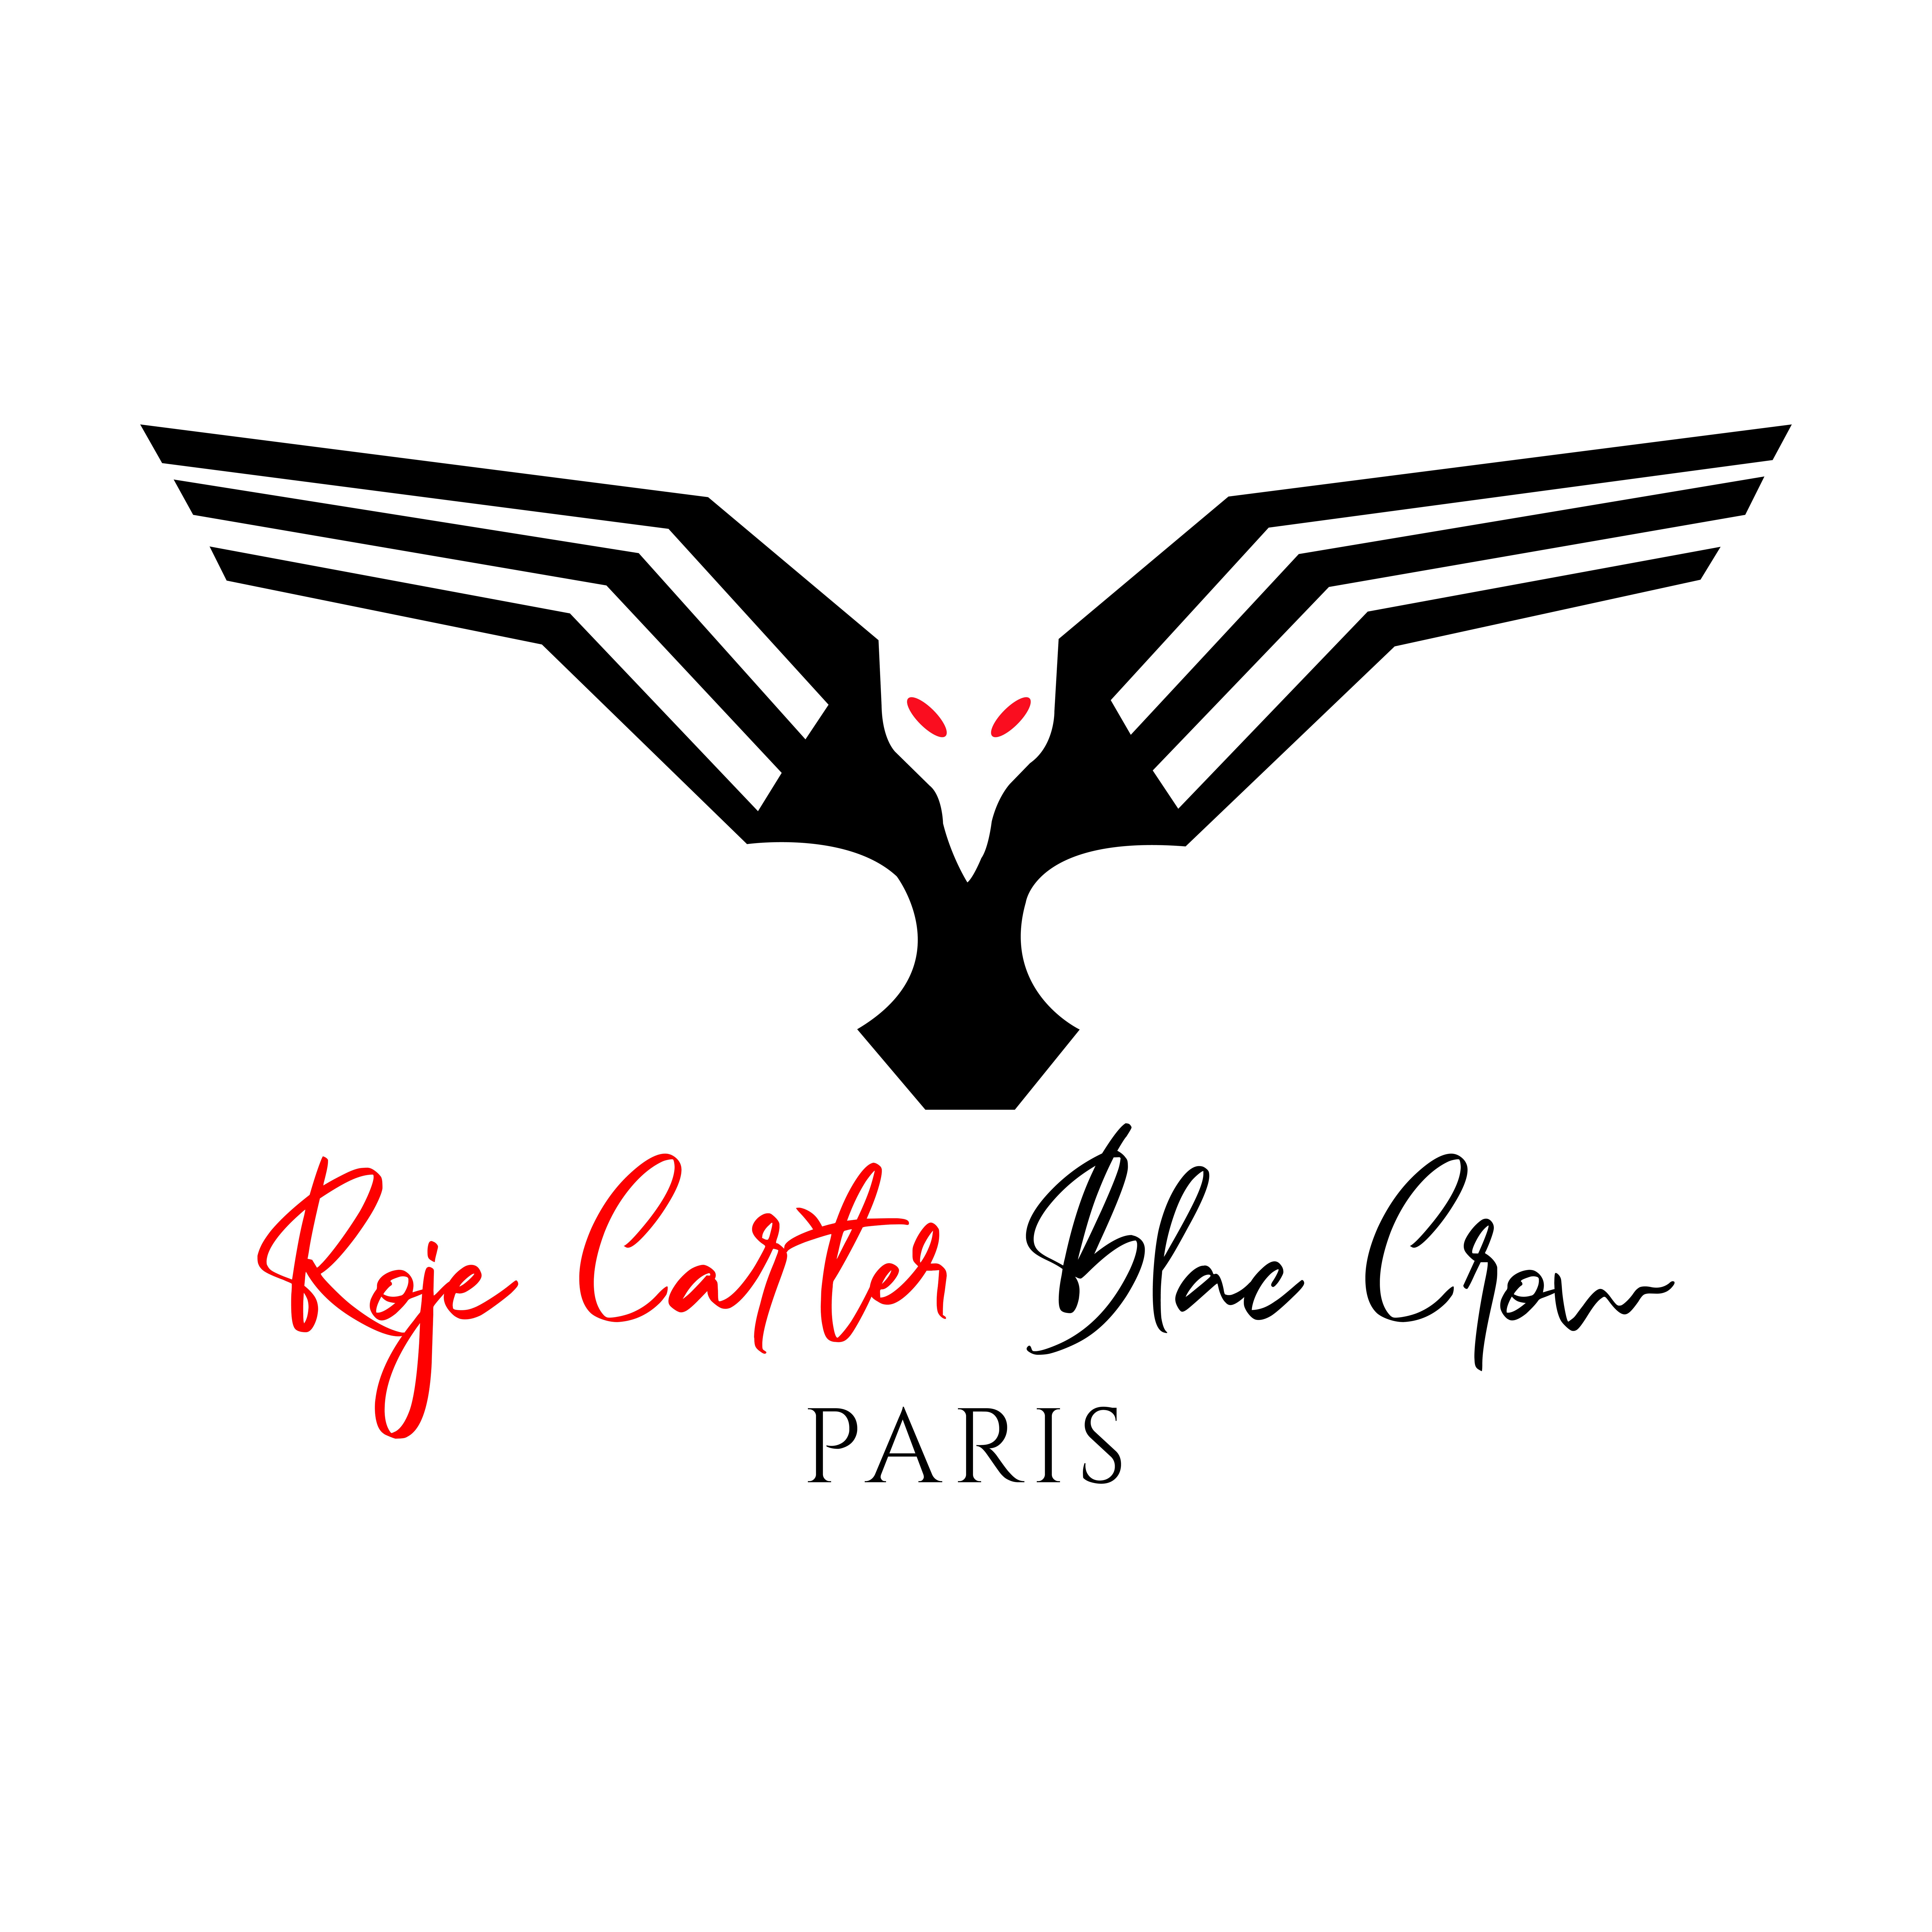 ROJE' CARTER BLAC CROW PARIS